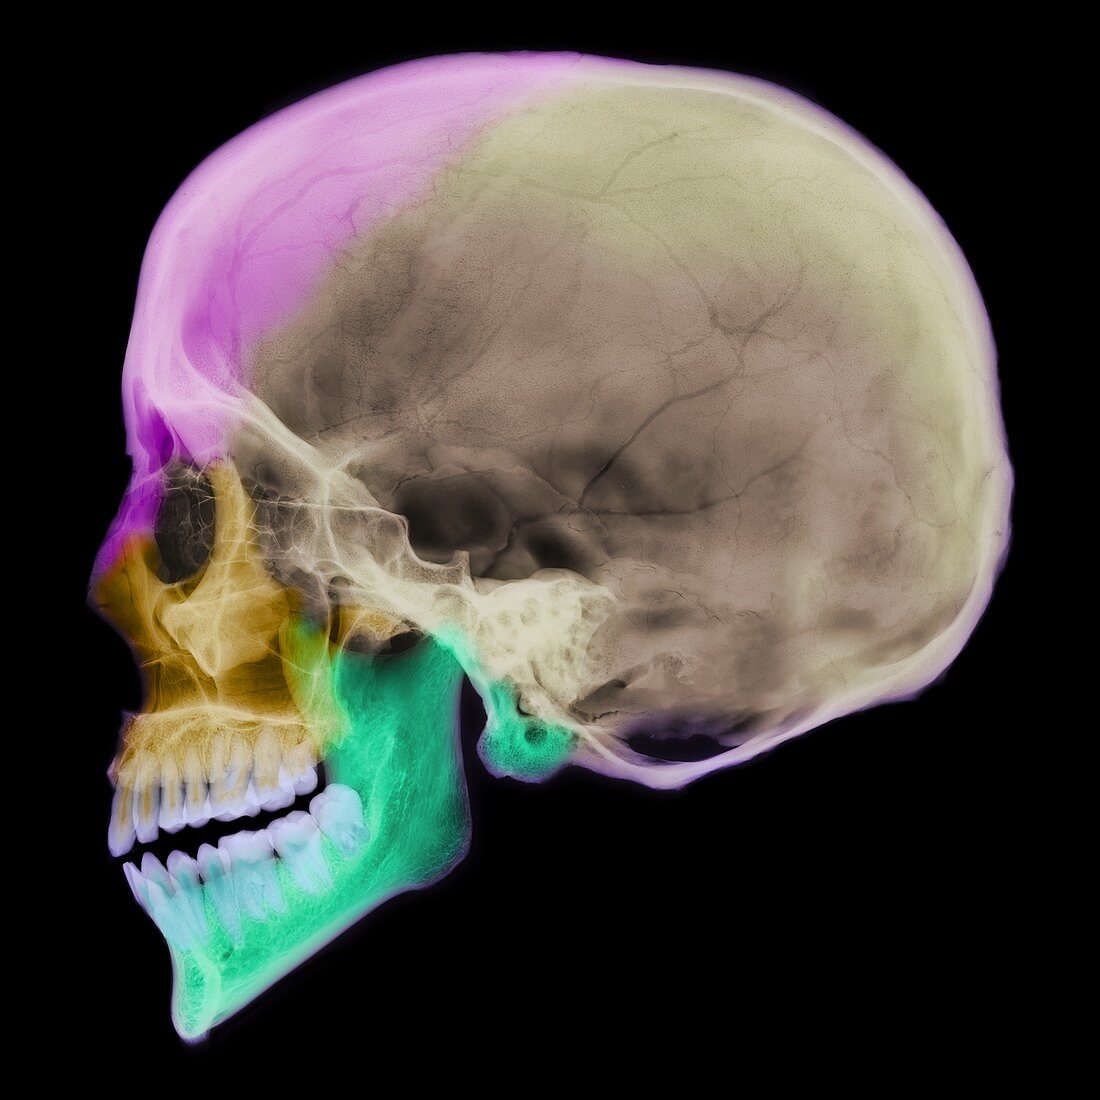 Facial nerves,X-ray